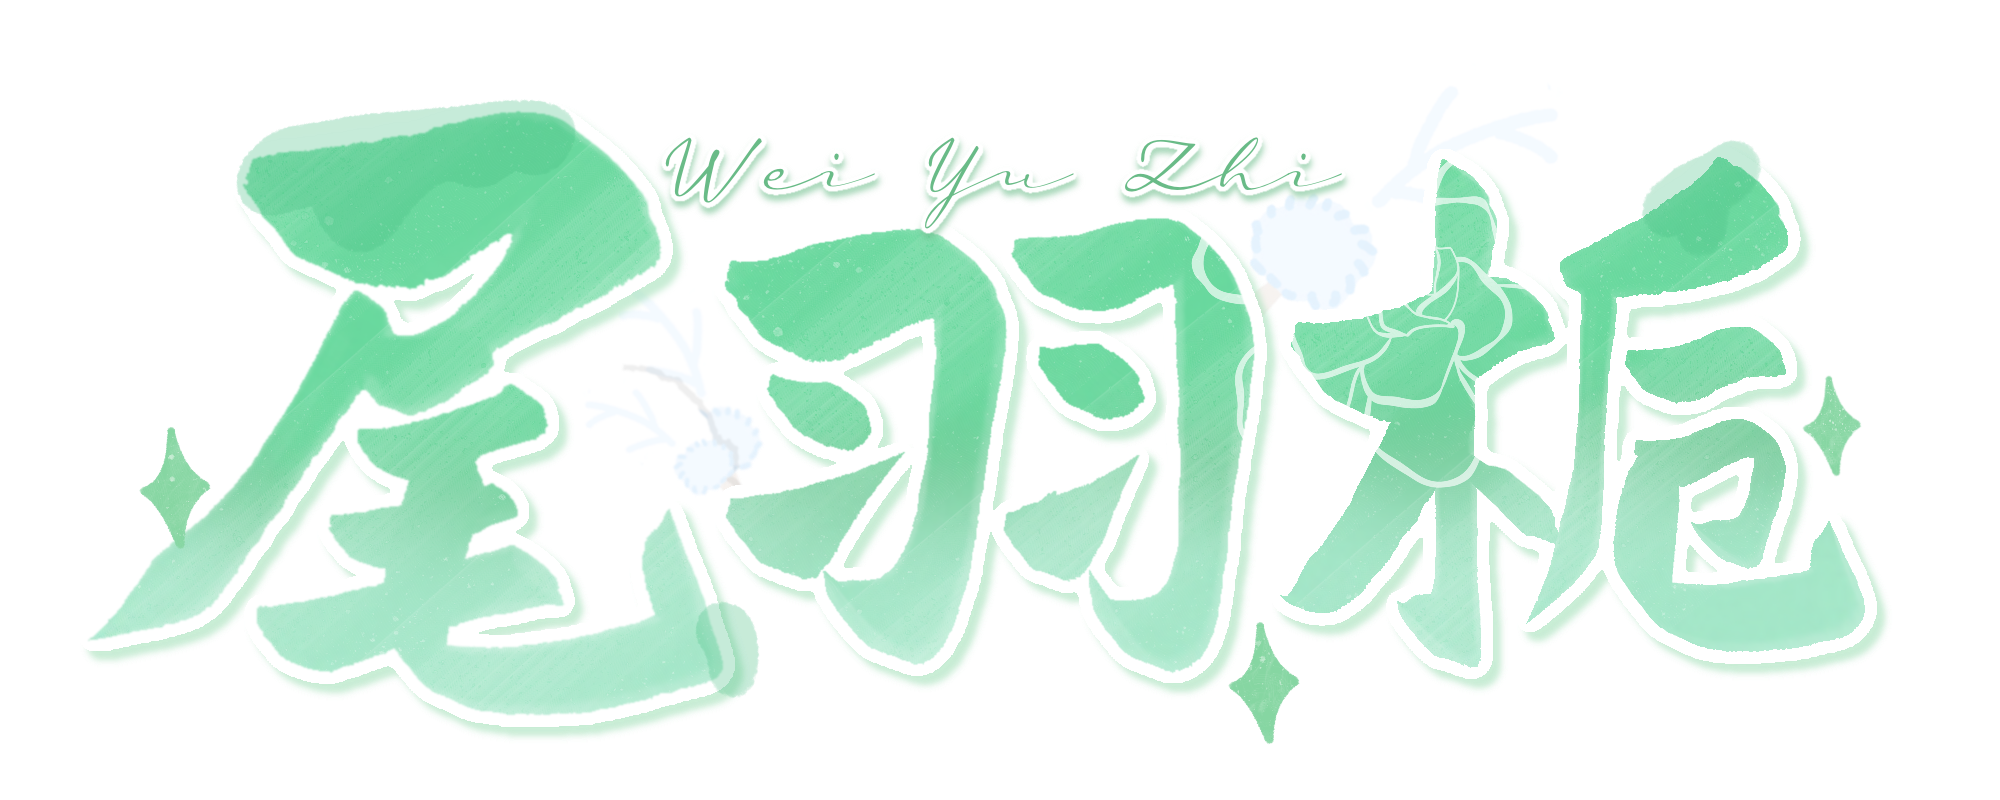 尾羽栀logo.png